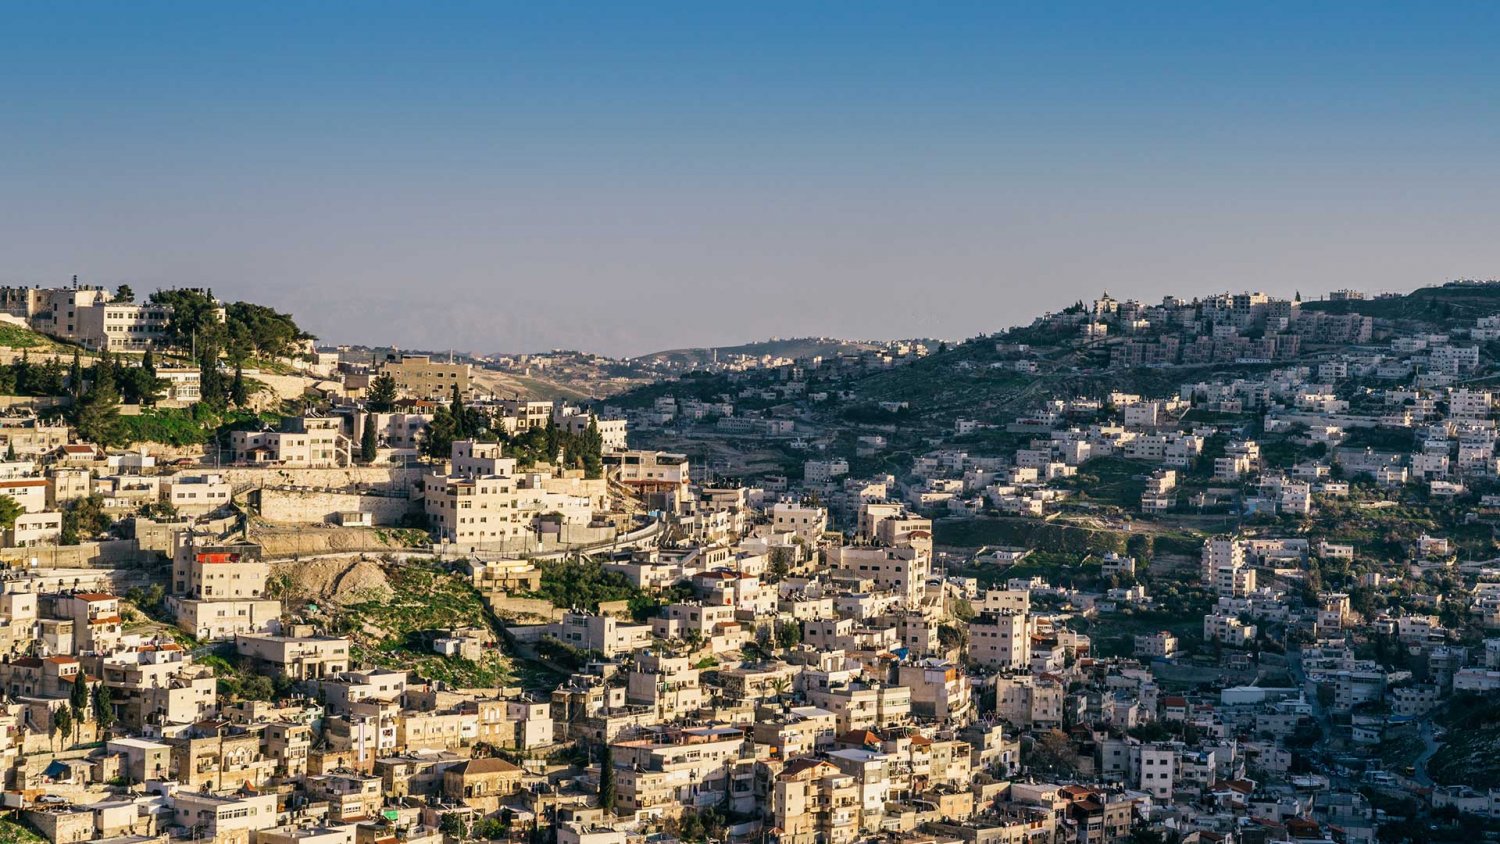 Panorama of Silwan neighborhood on the outskirts of Jerusalem's Old City